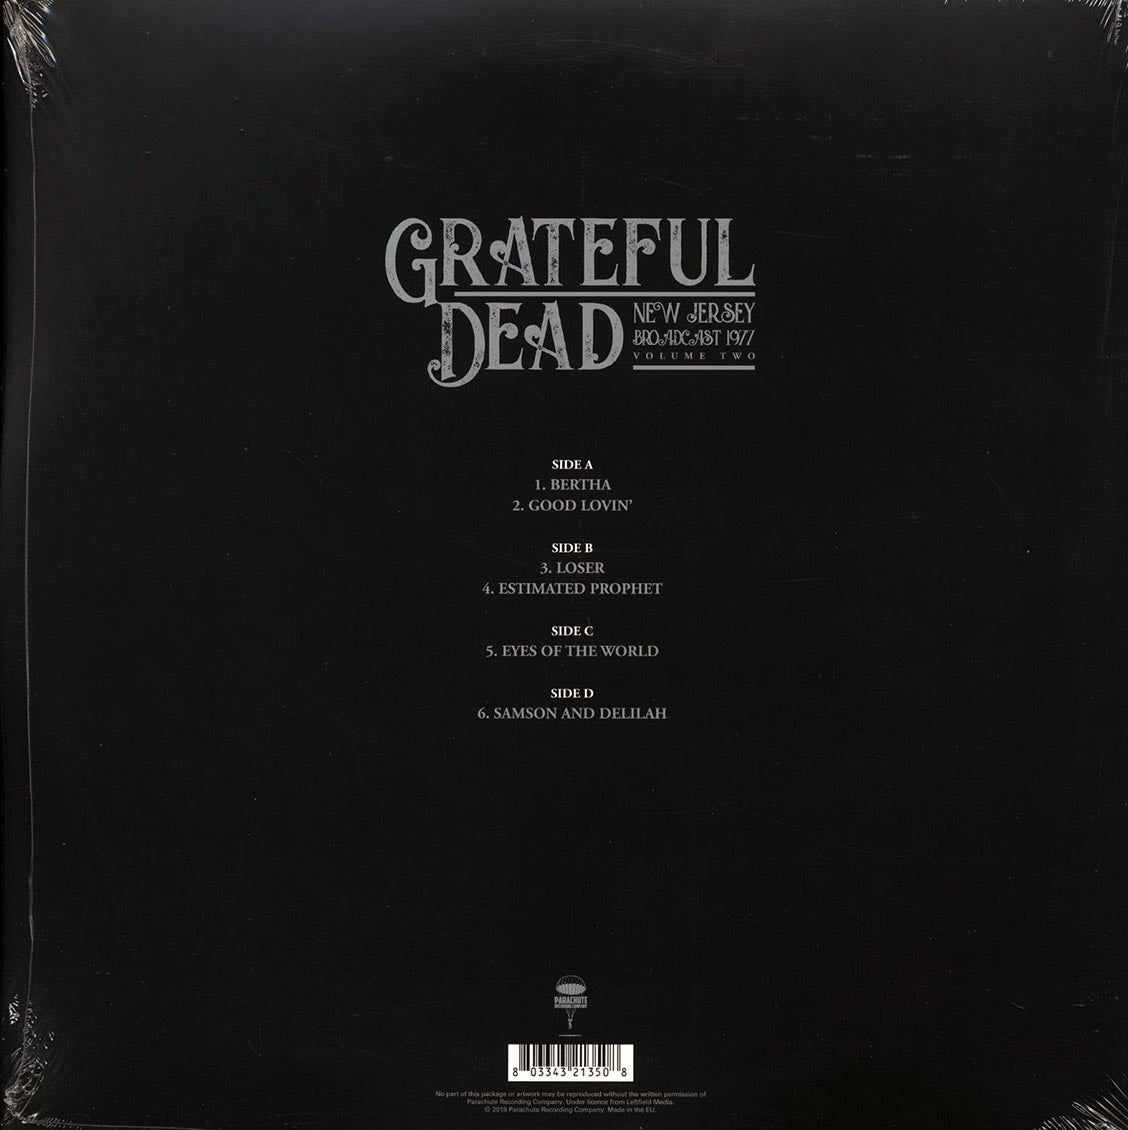 Grateful Dead - New Jersey Broadcast 1977 Volume 2 (ltd. ed.) (2xLP) - Vinyl LP, LP